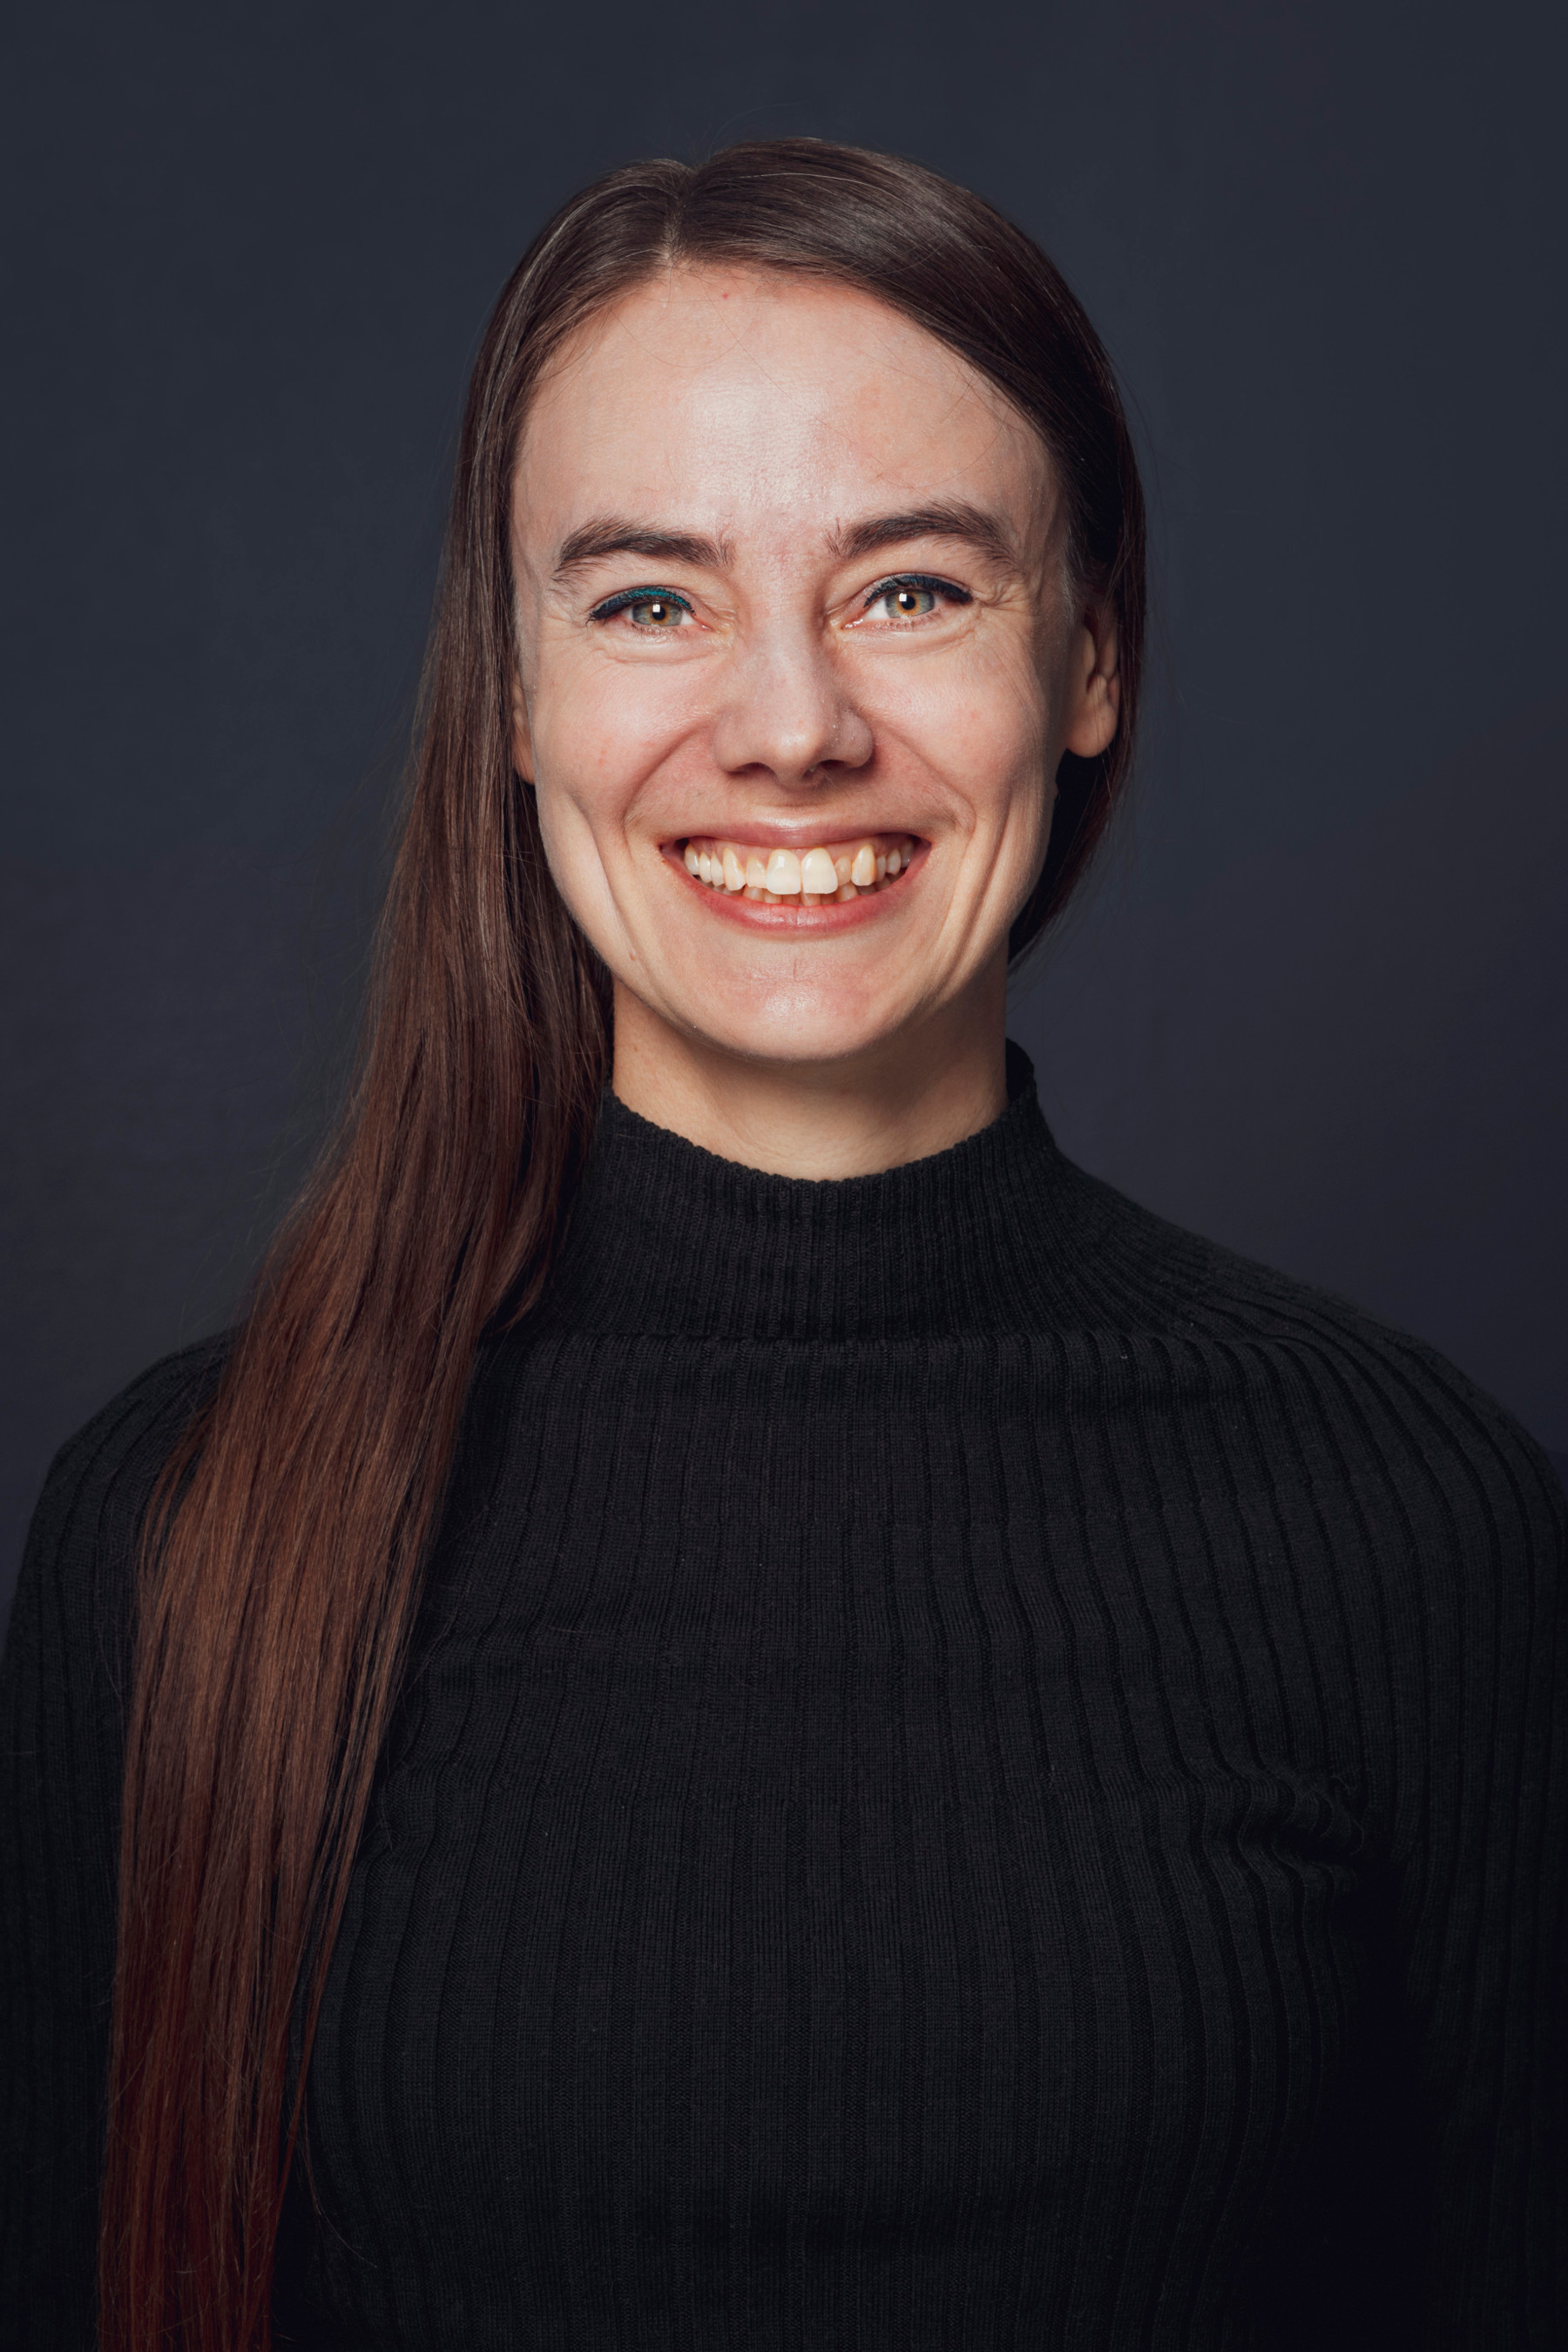 Profile photo of Marieke smiling wearing a black jumper